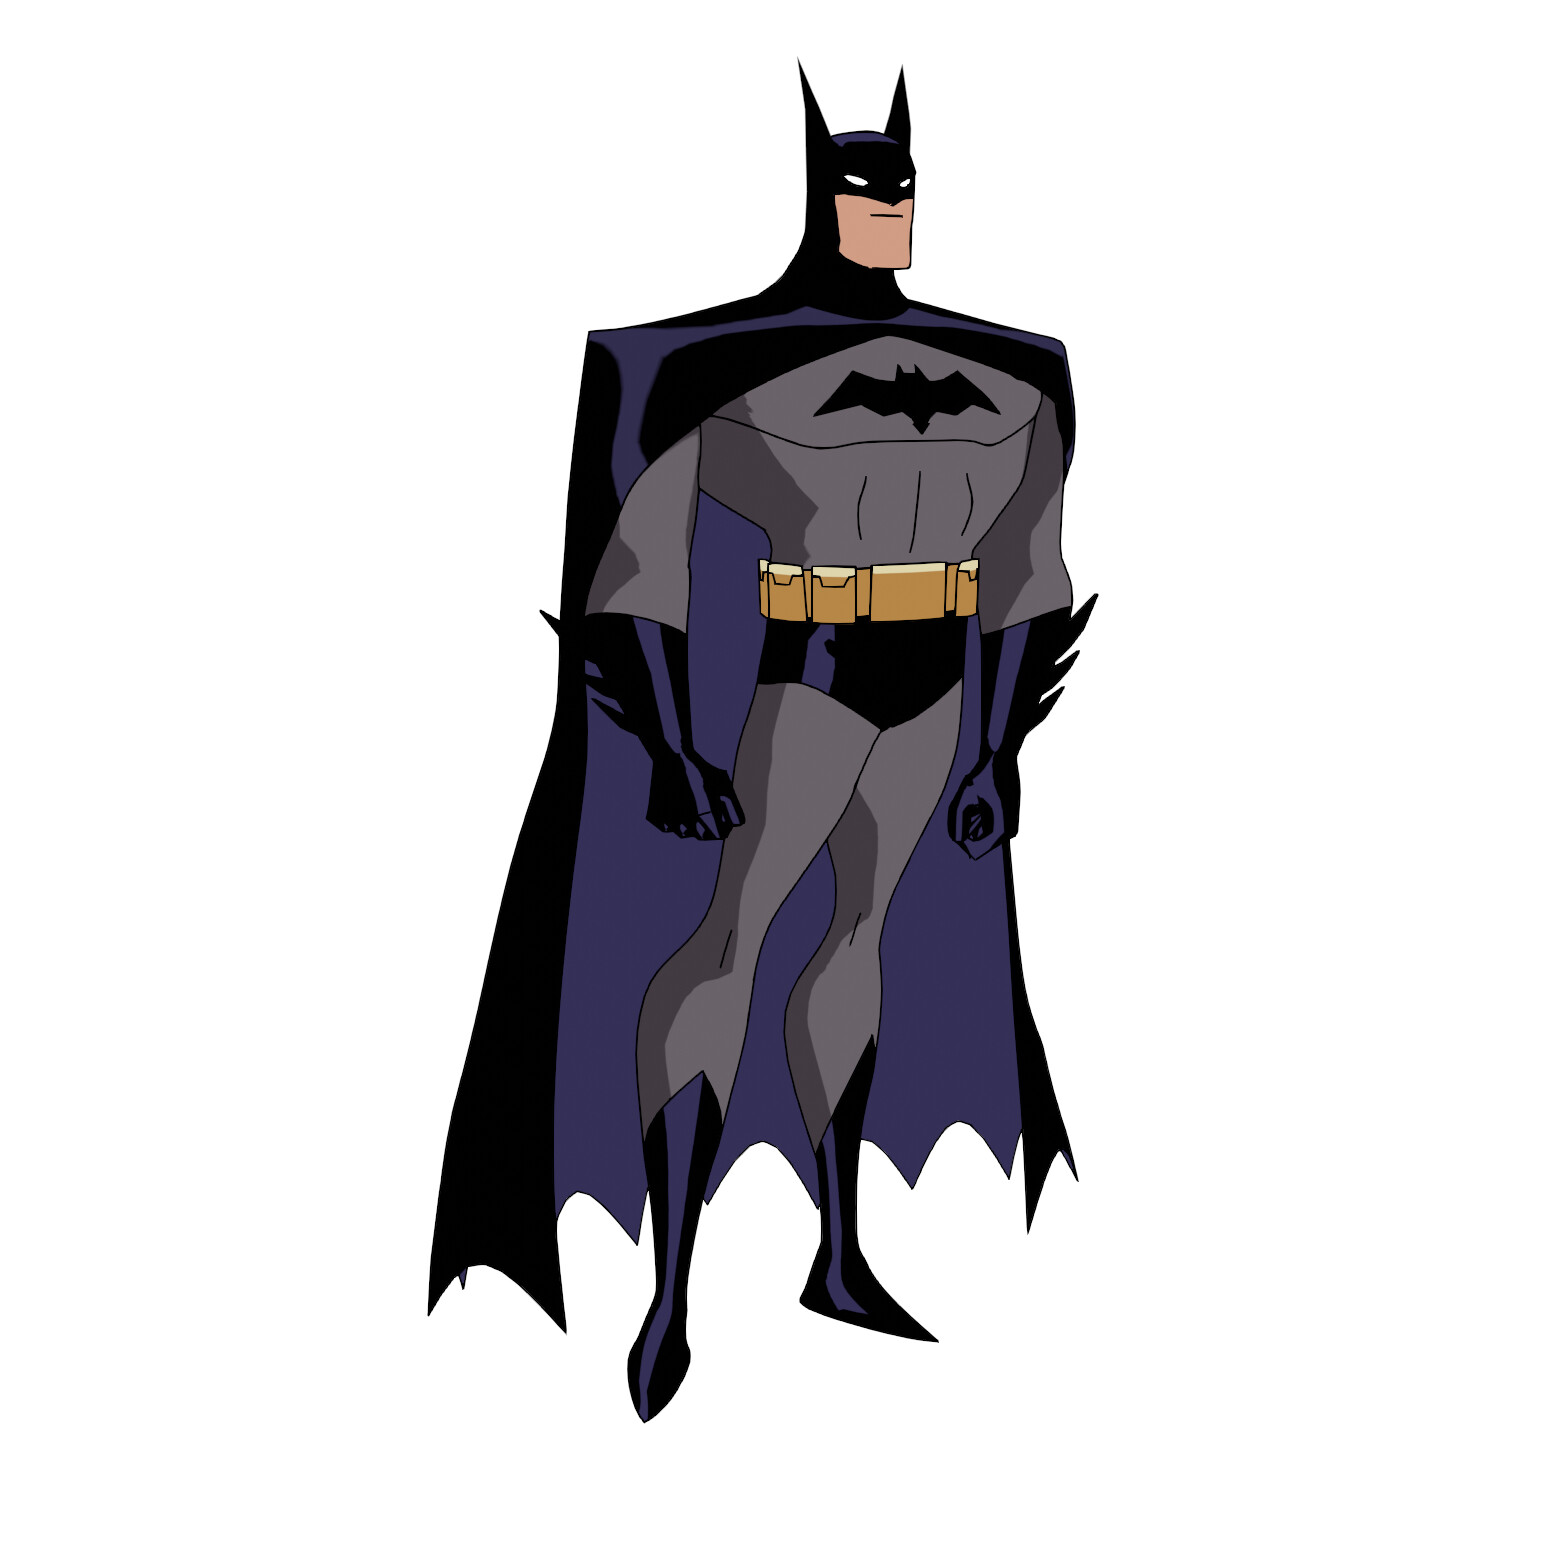 ArtStation - 3D Justice League Animated Series: Batman